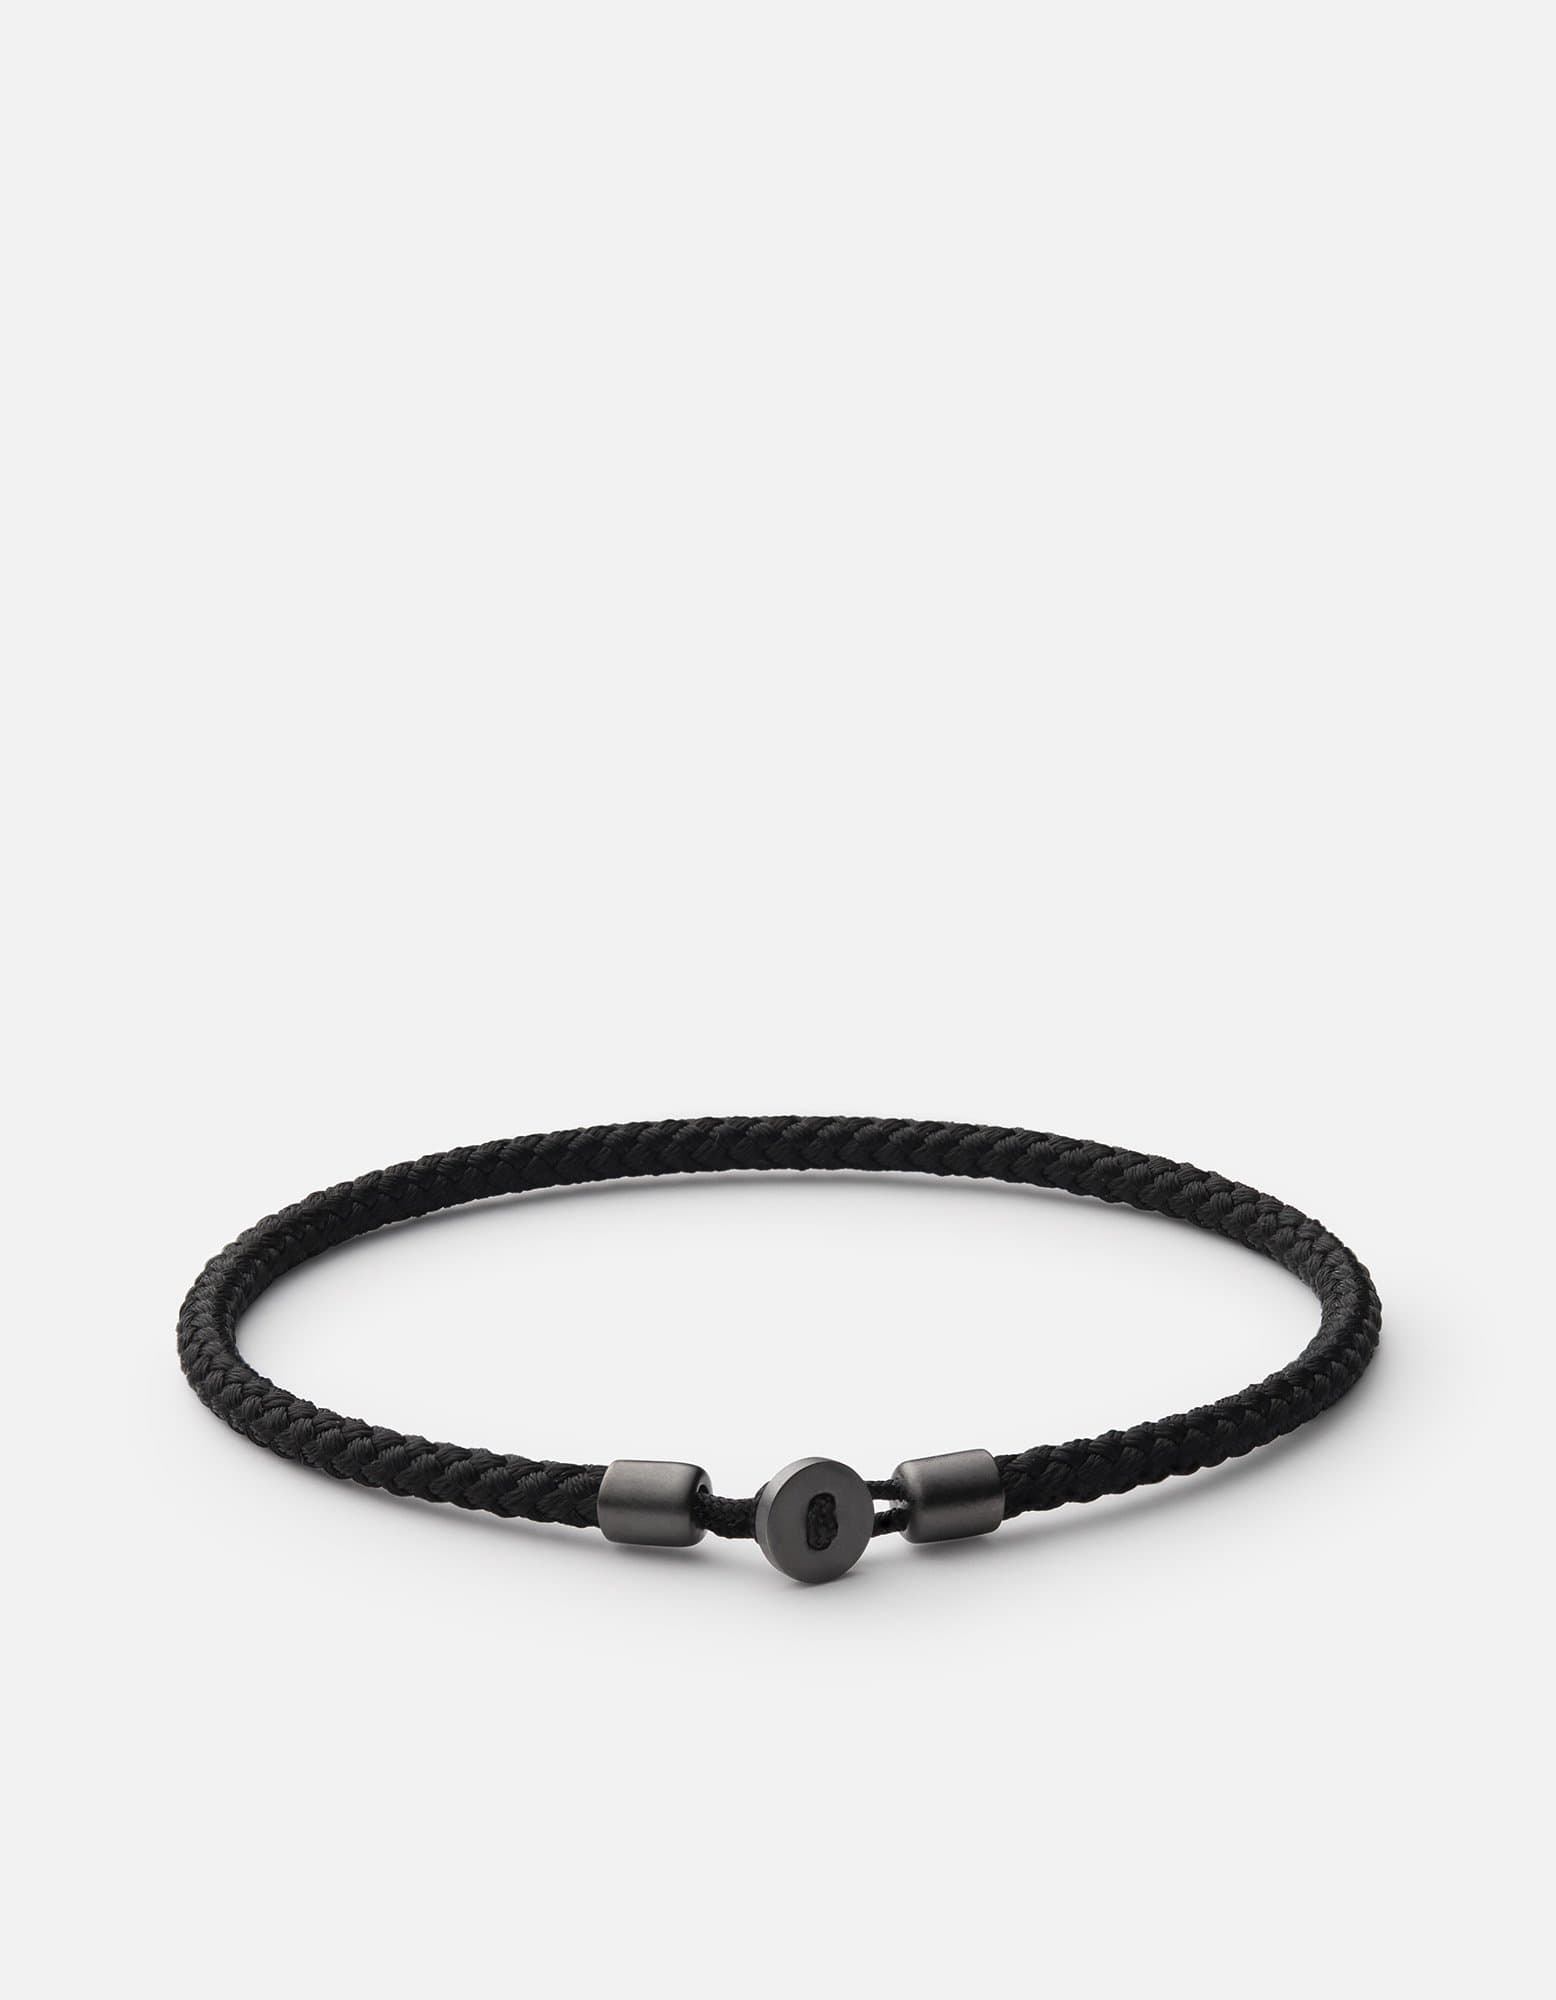 Nexus Rope Bracelet, Matte Black Rhodium, Men's Bracelets